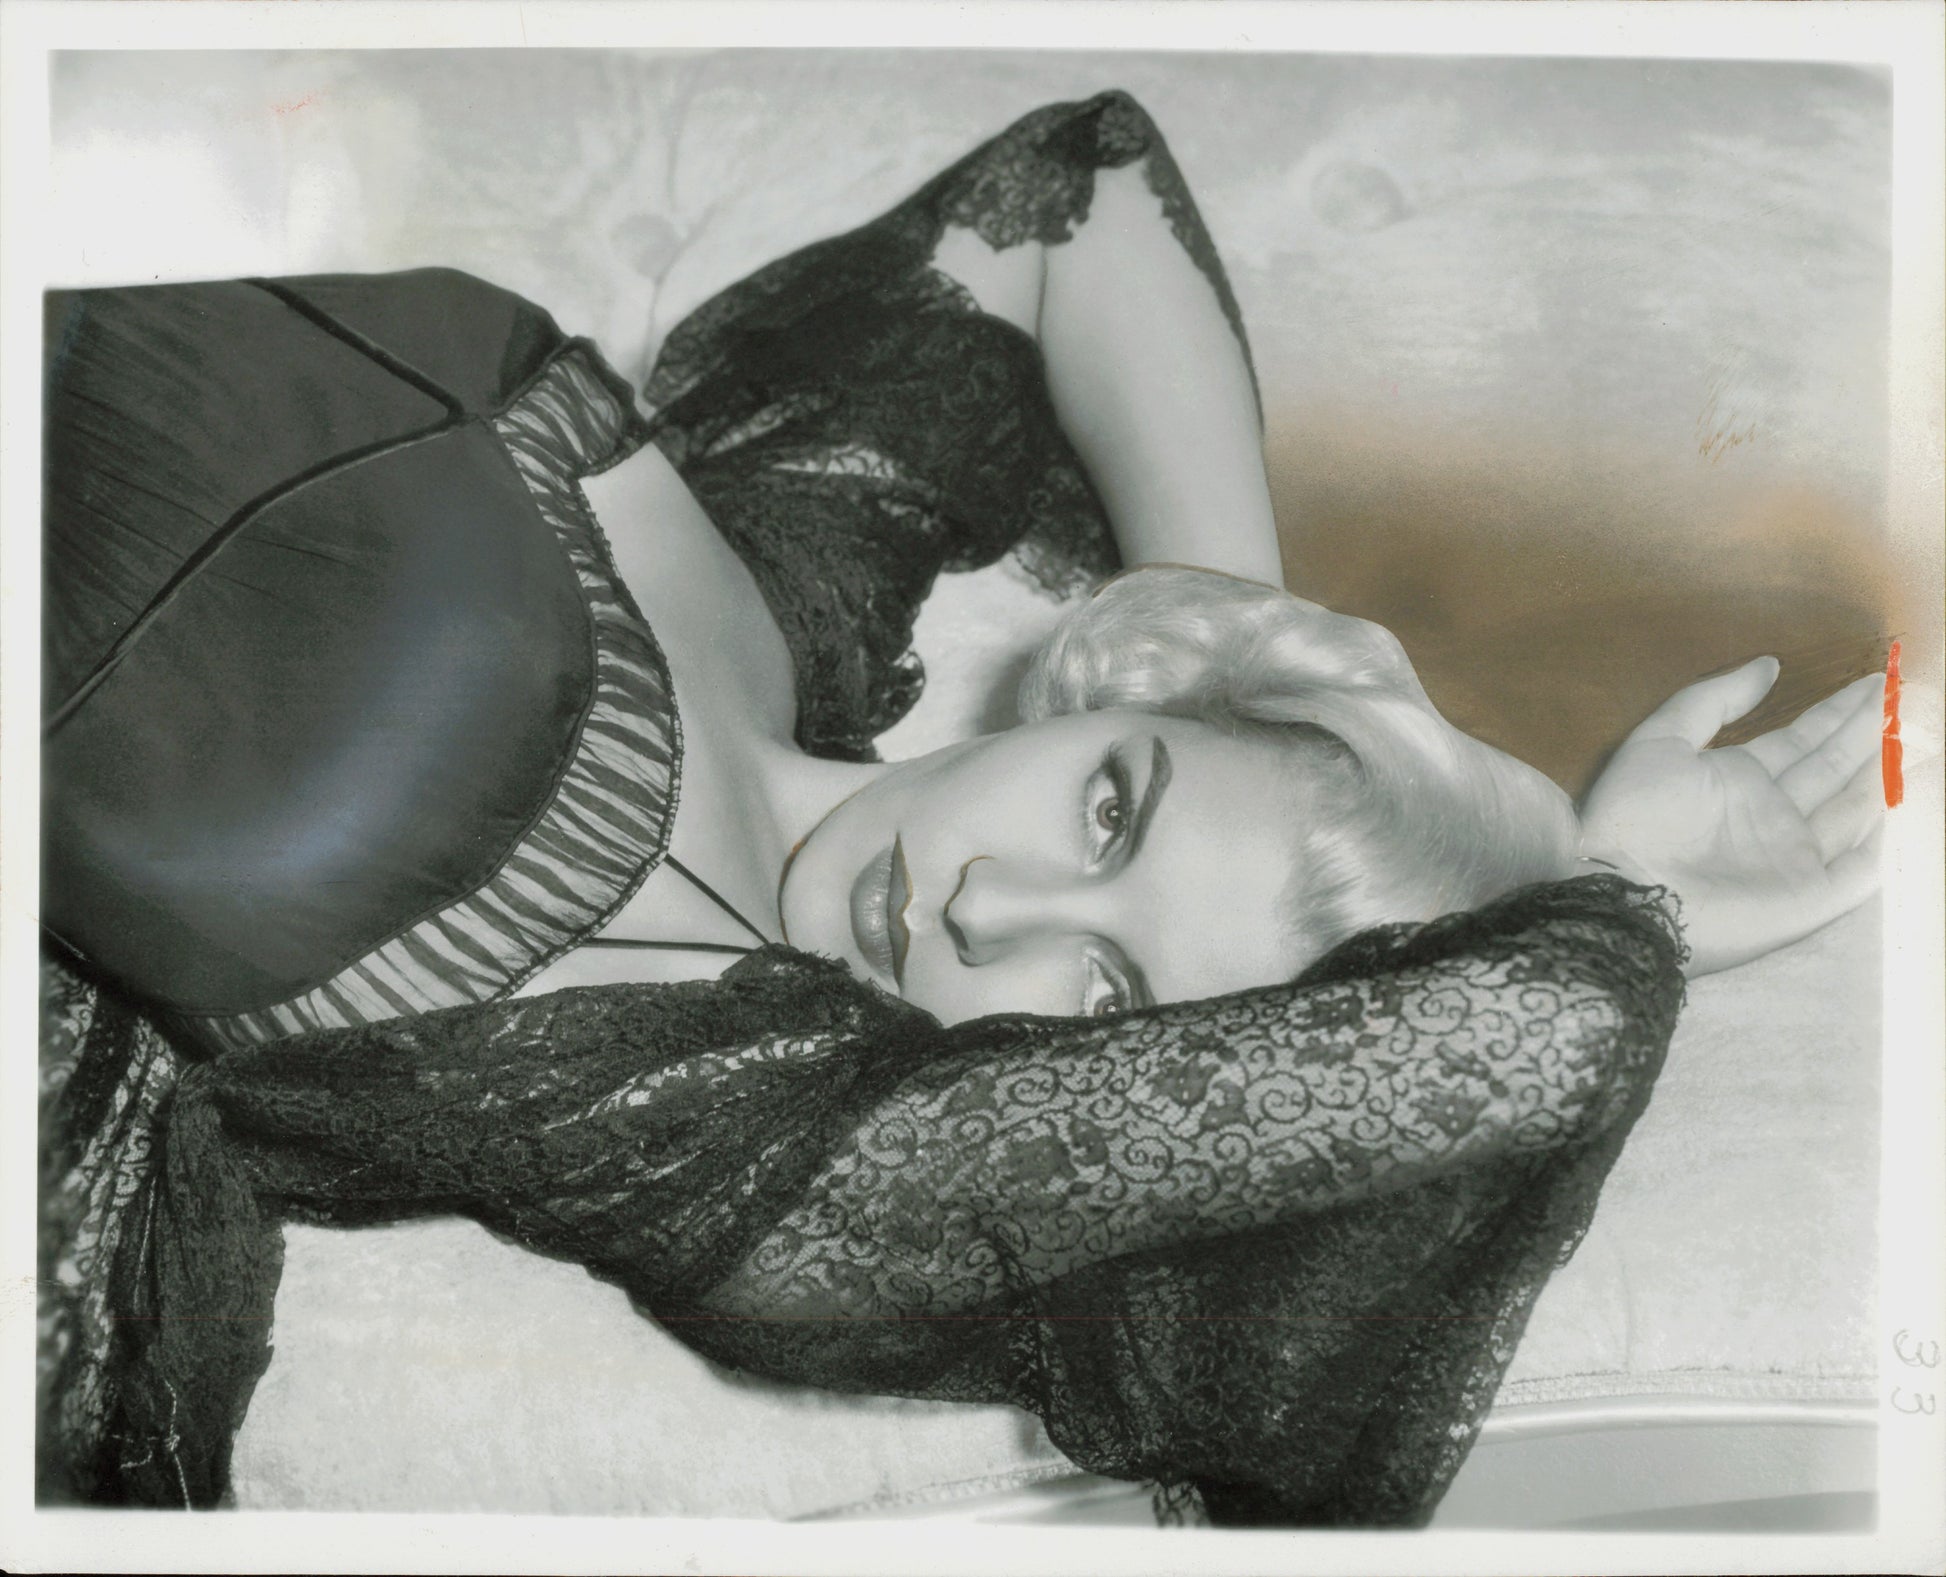 Rosanna Rory Portraits by Burt Six (1956) (2 vintage prints) Hollywood Model Photographer Stamped